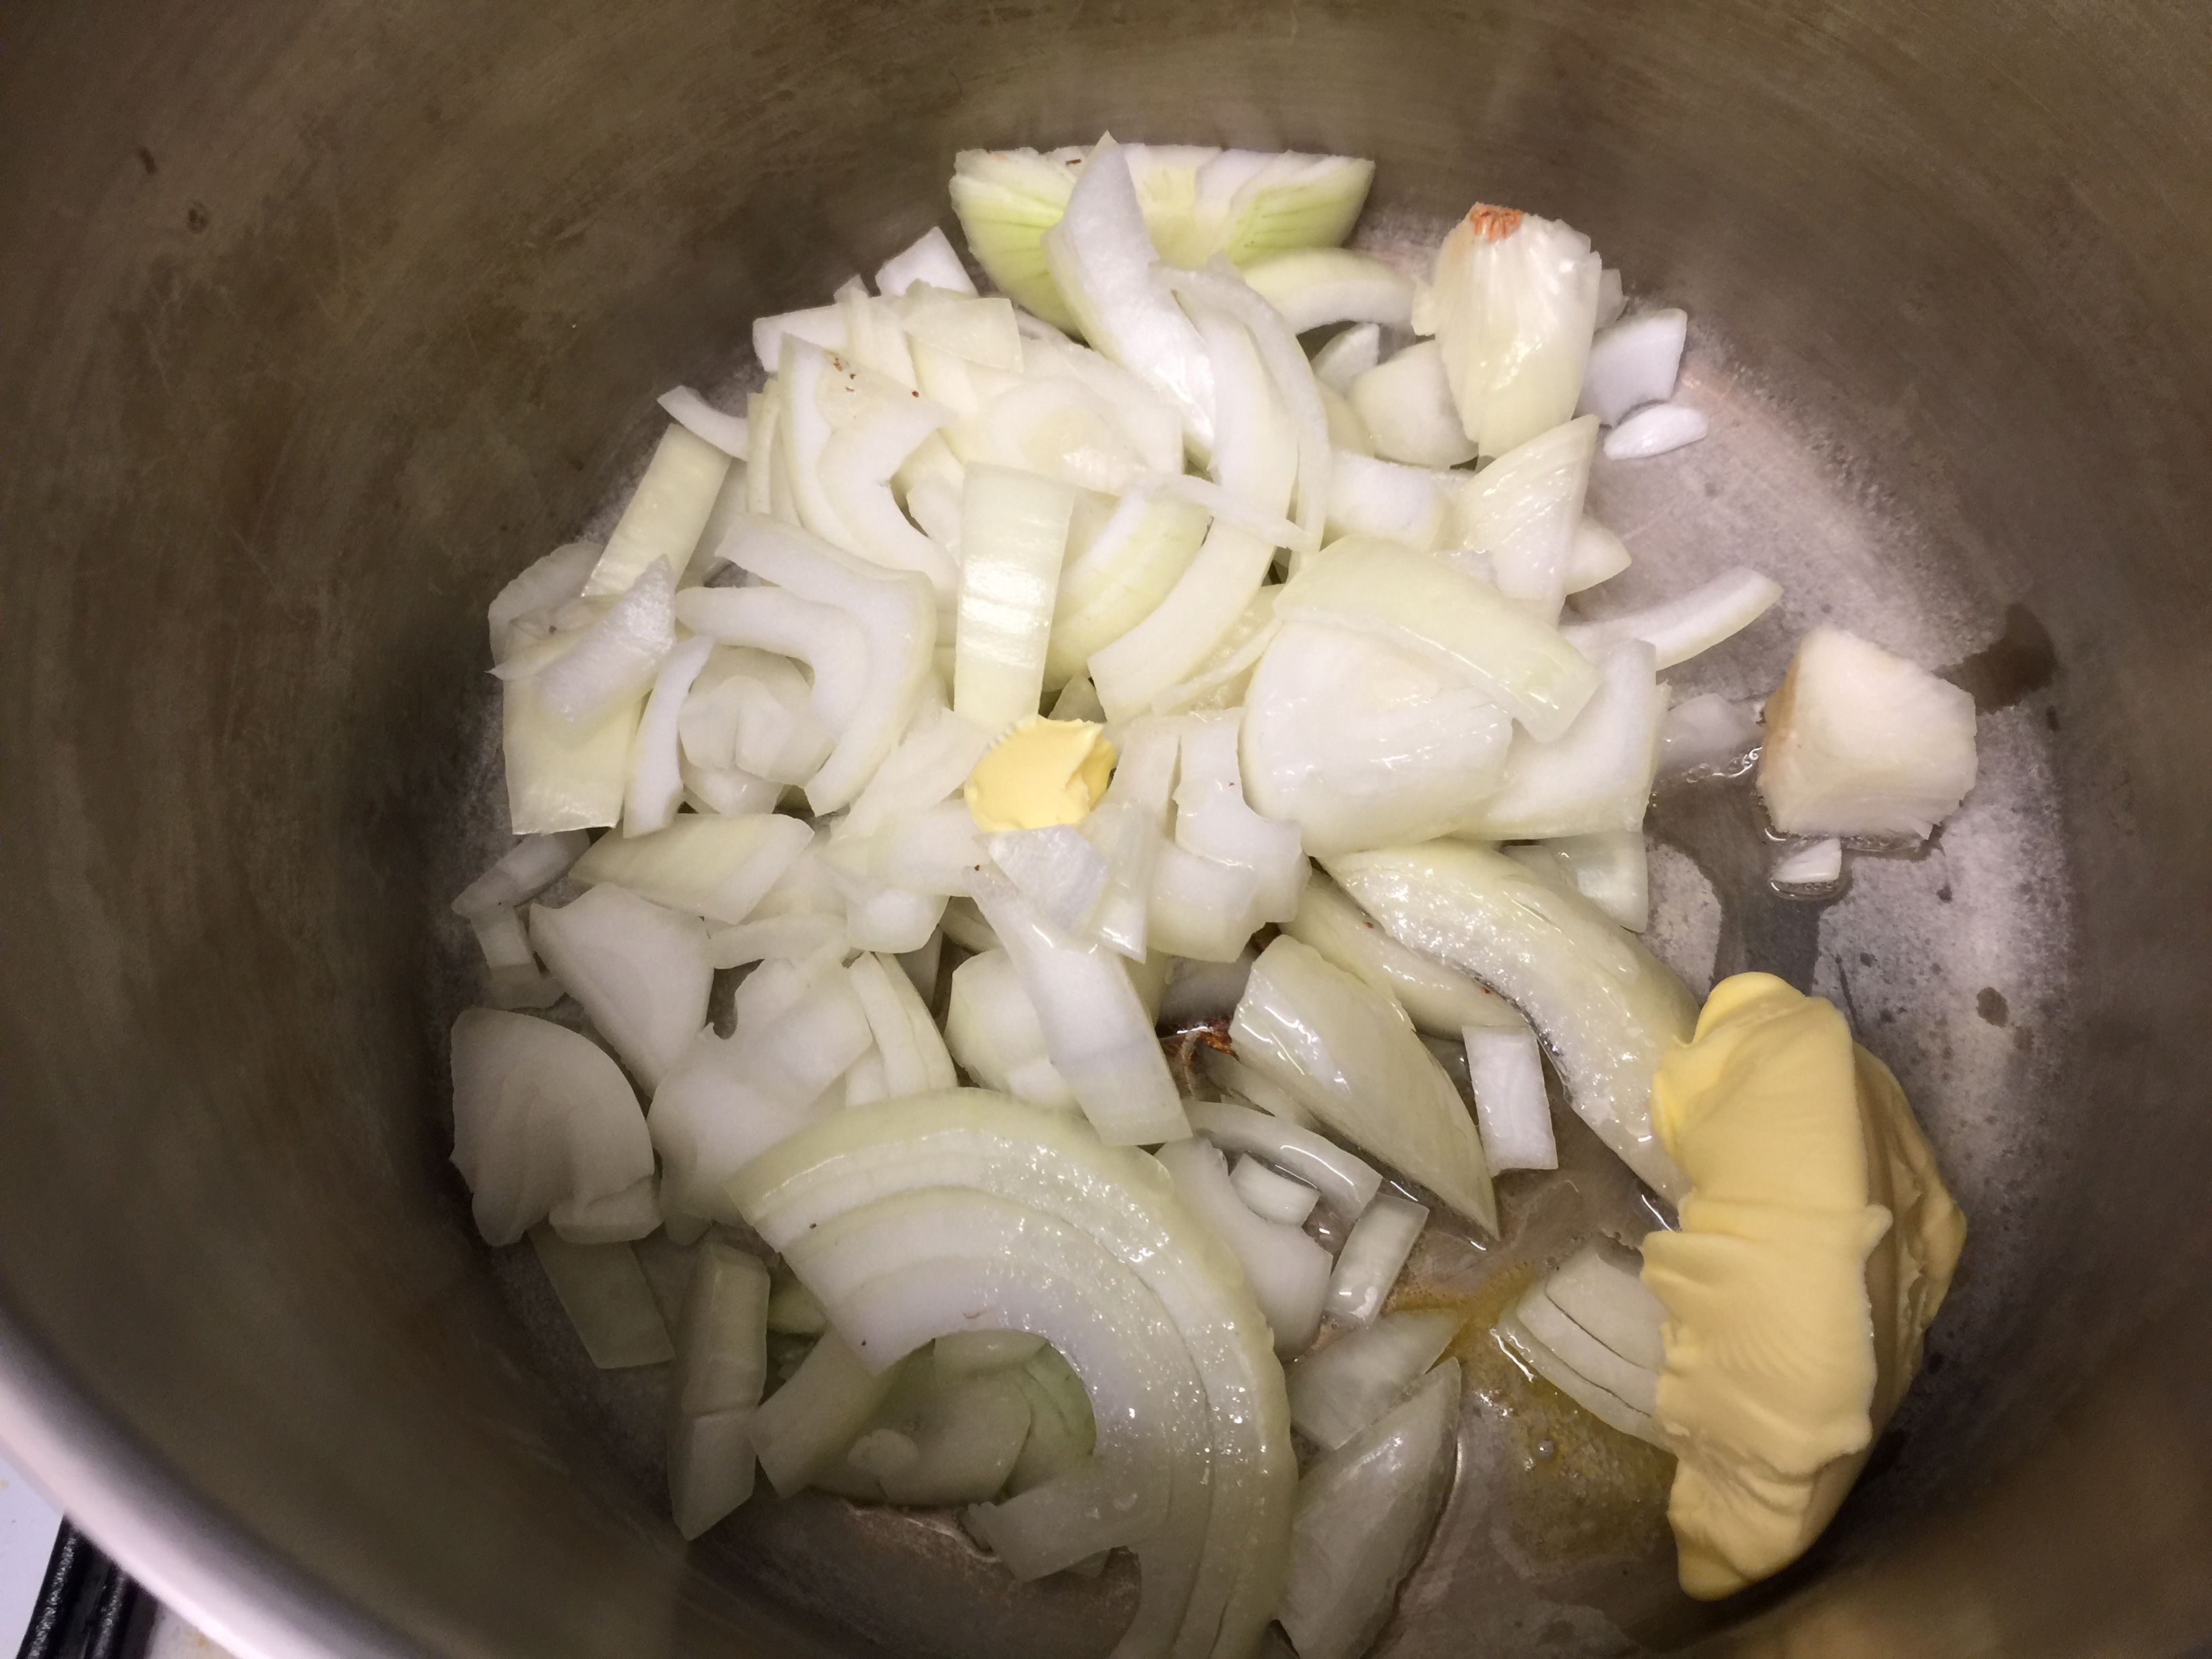 Sweat the onions